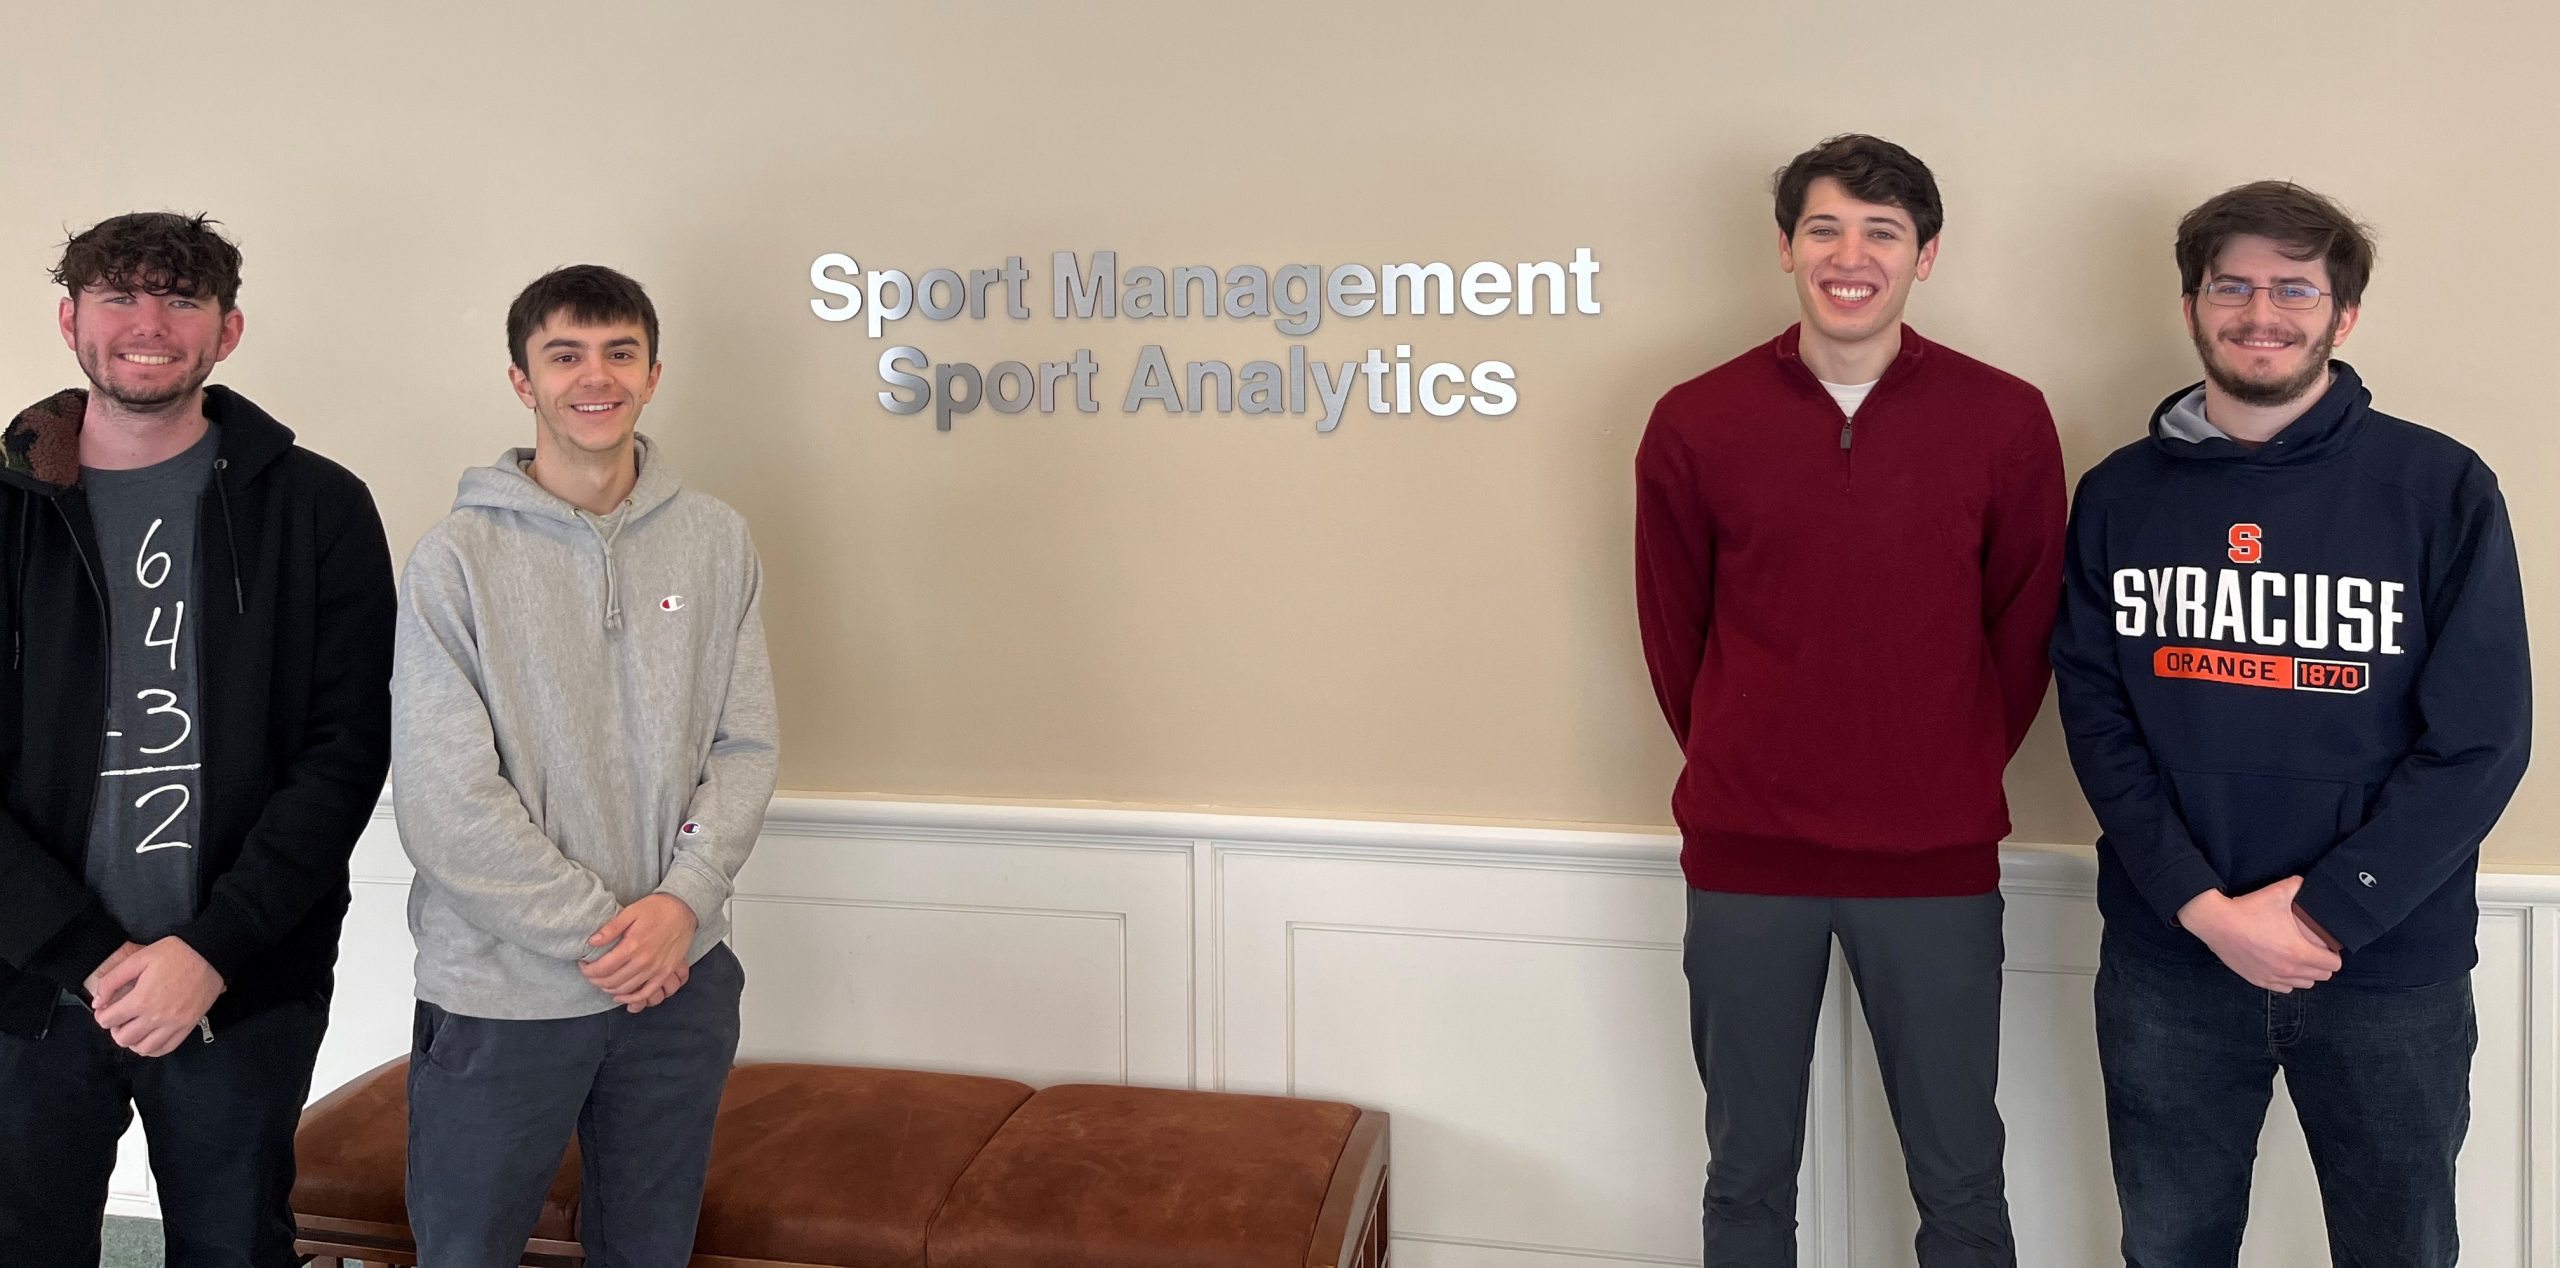 Matthew Gennaro, Alexander Borelli, Sam Gelman and Benjamin Wachtel pose in front of lettering that says "Sport Management Sport Analytics" in the Falk College